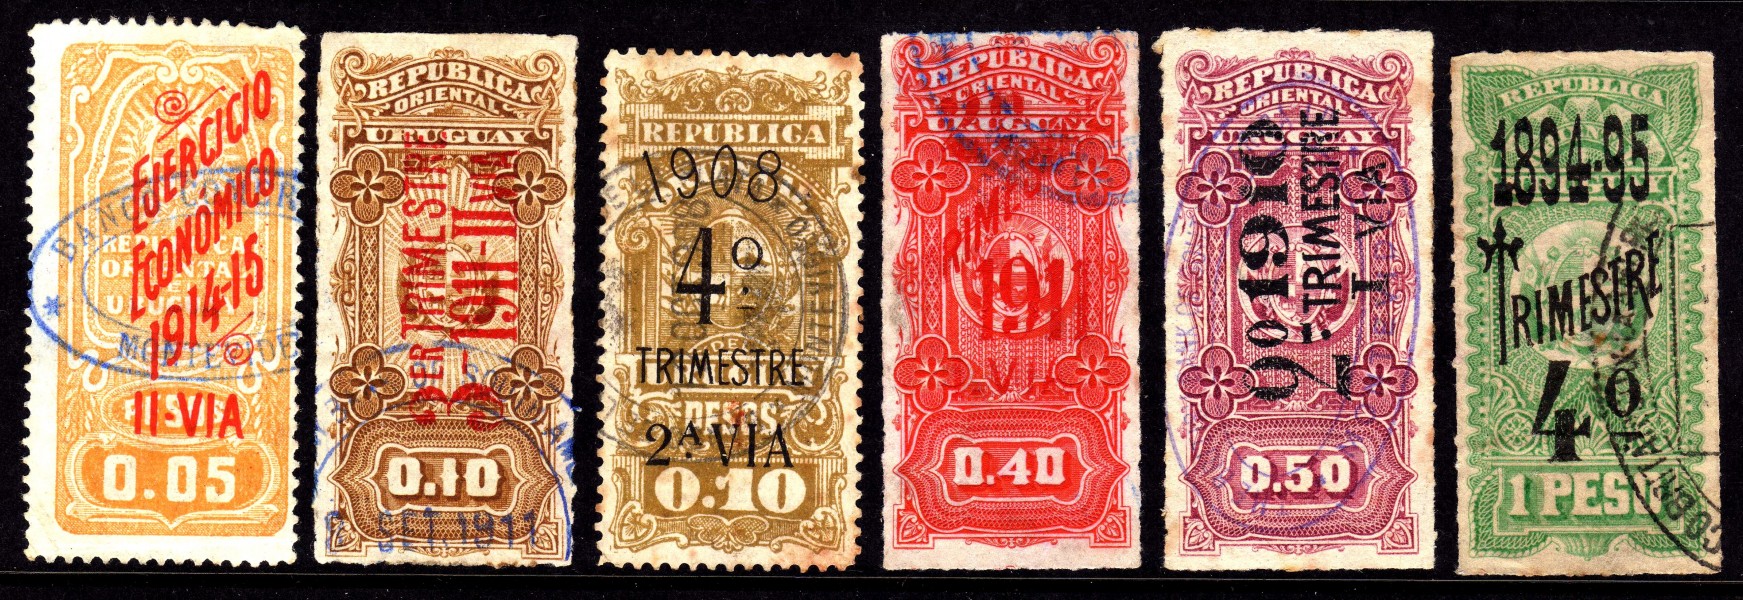 Revenue stamps of Uruguay